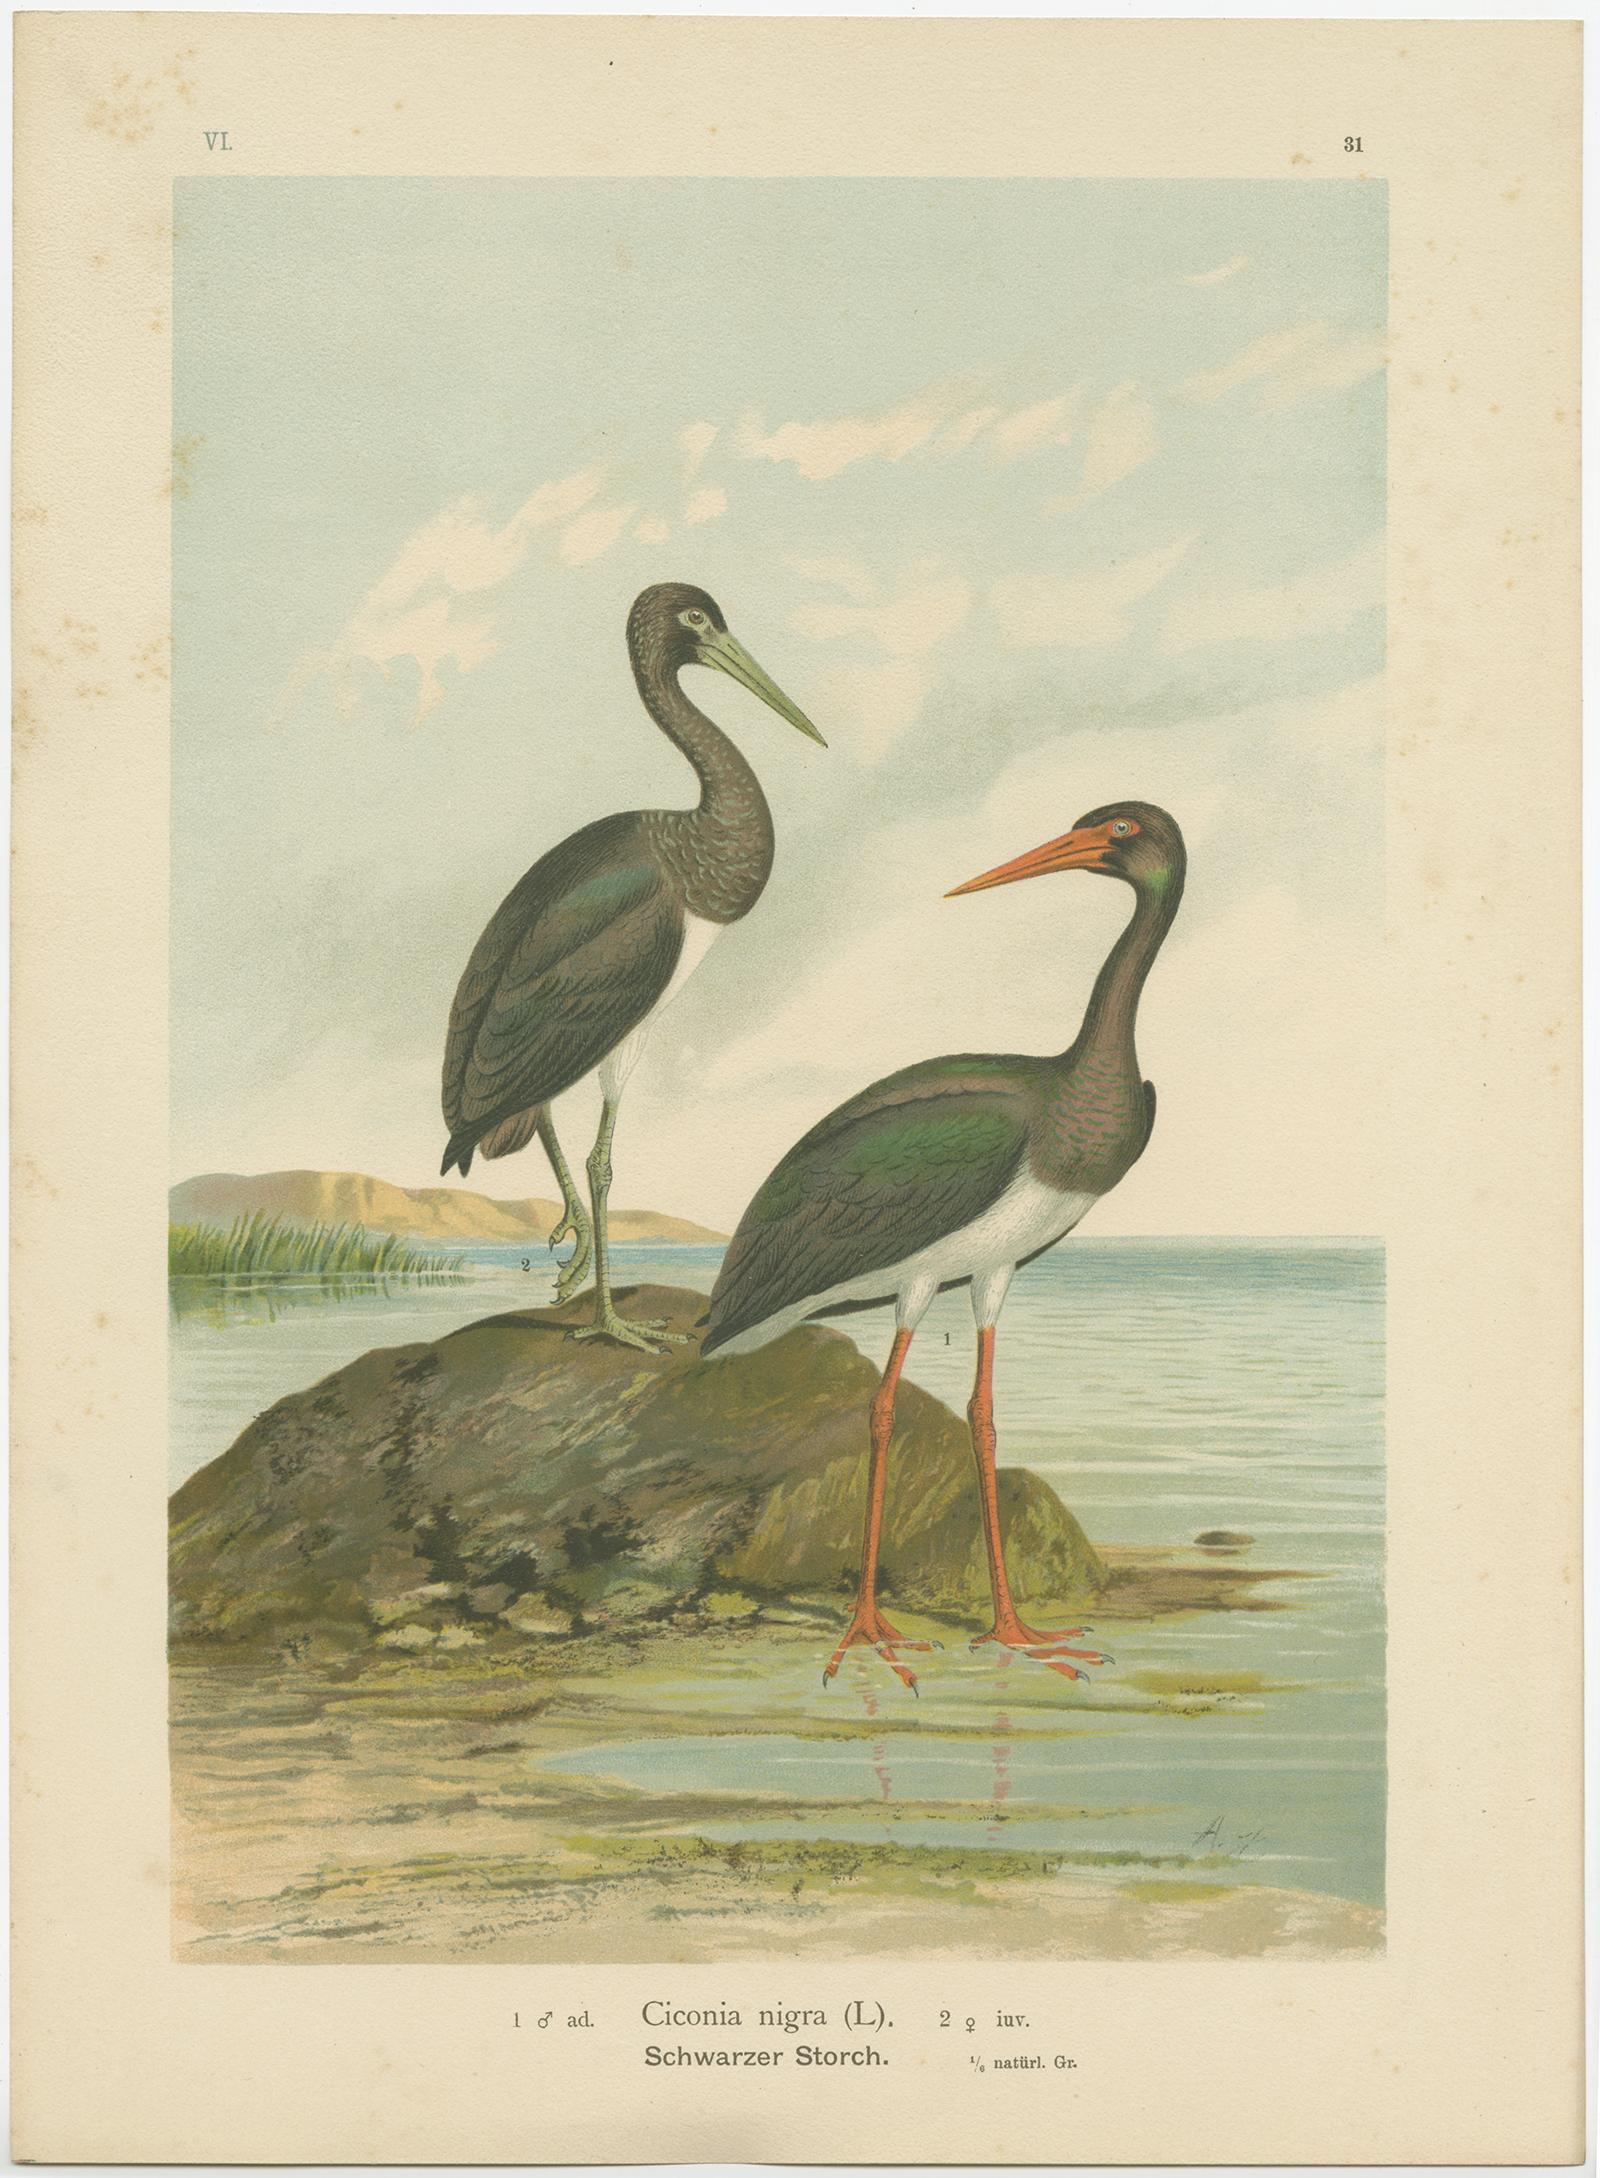 Antique bird print titled 'Ciconia Nigra - Schwarzer Storch'. Chromolithograph of the black stork. This print originates from J.A. Naumann's 'Naturgeschichte der Vögel Mitteleuropas', published, circa 1895.